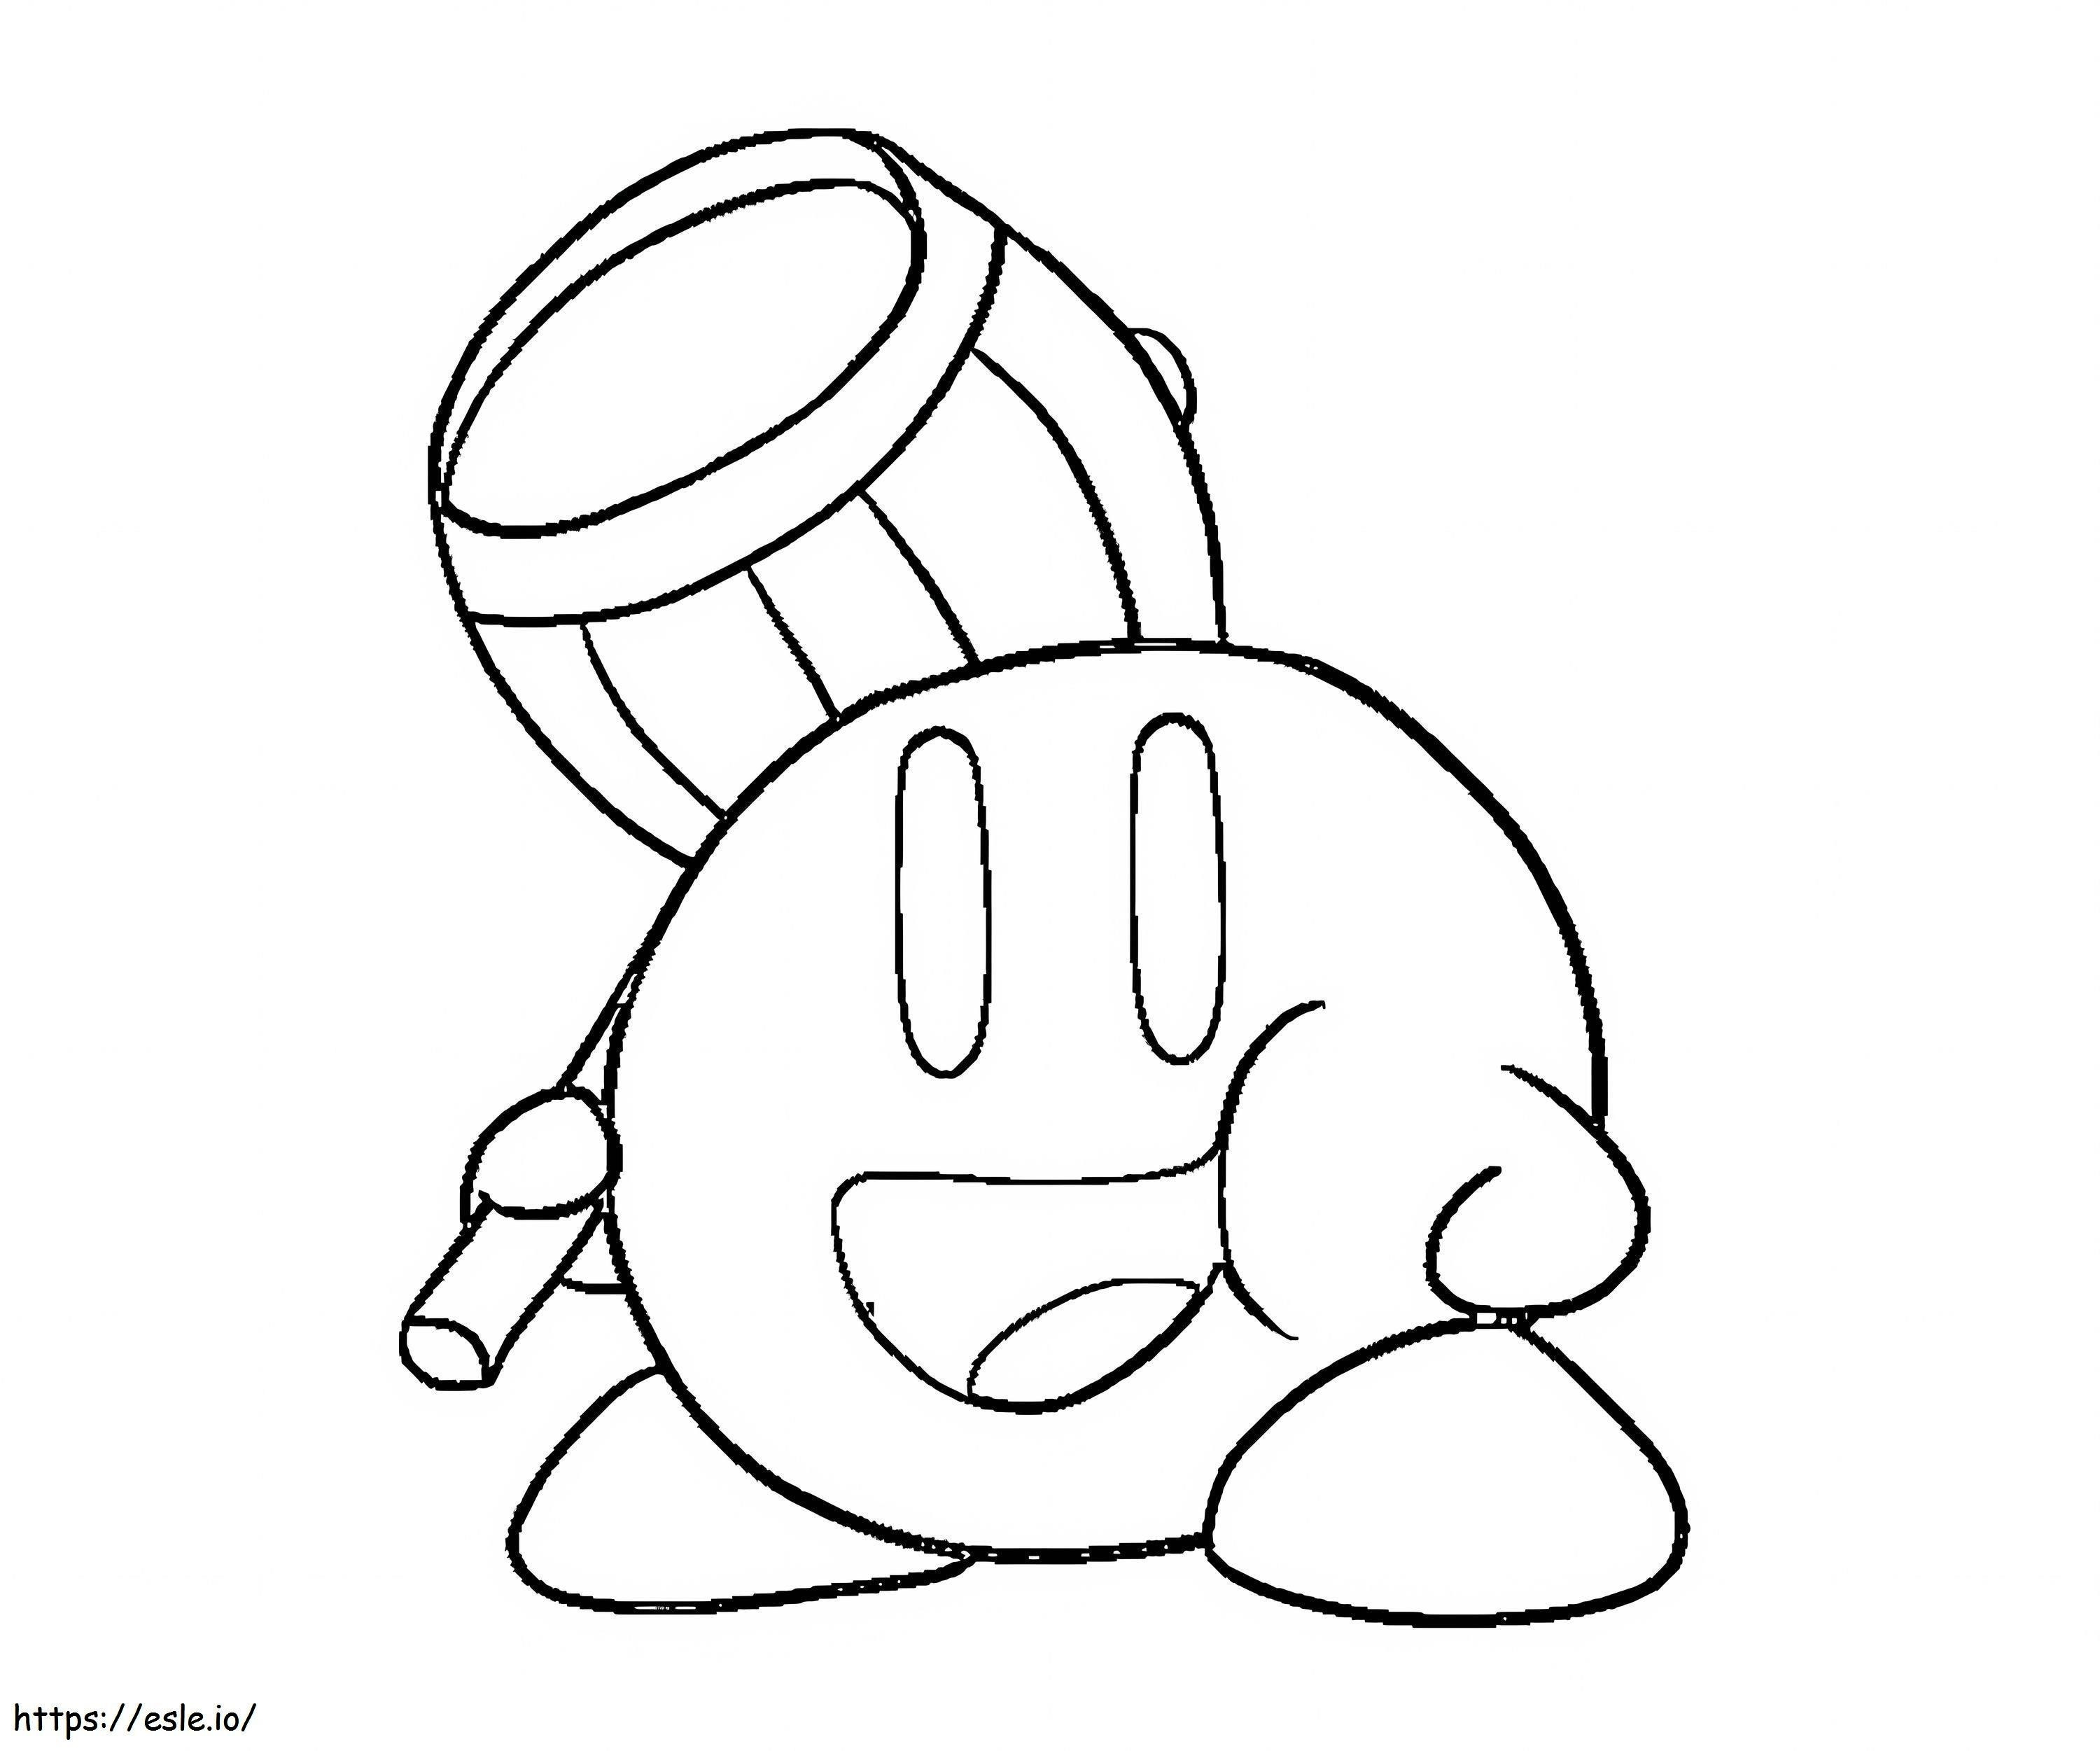 Teken Kirby die een hamer vasthoudt kleurplaat kleurplaat